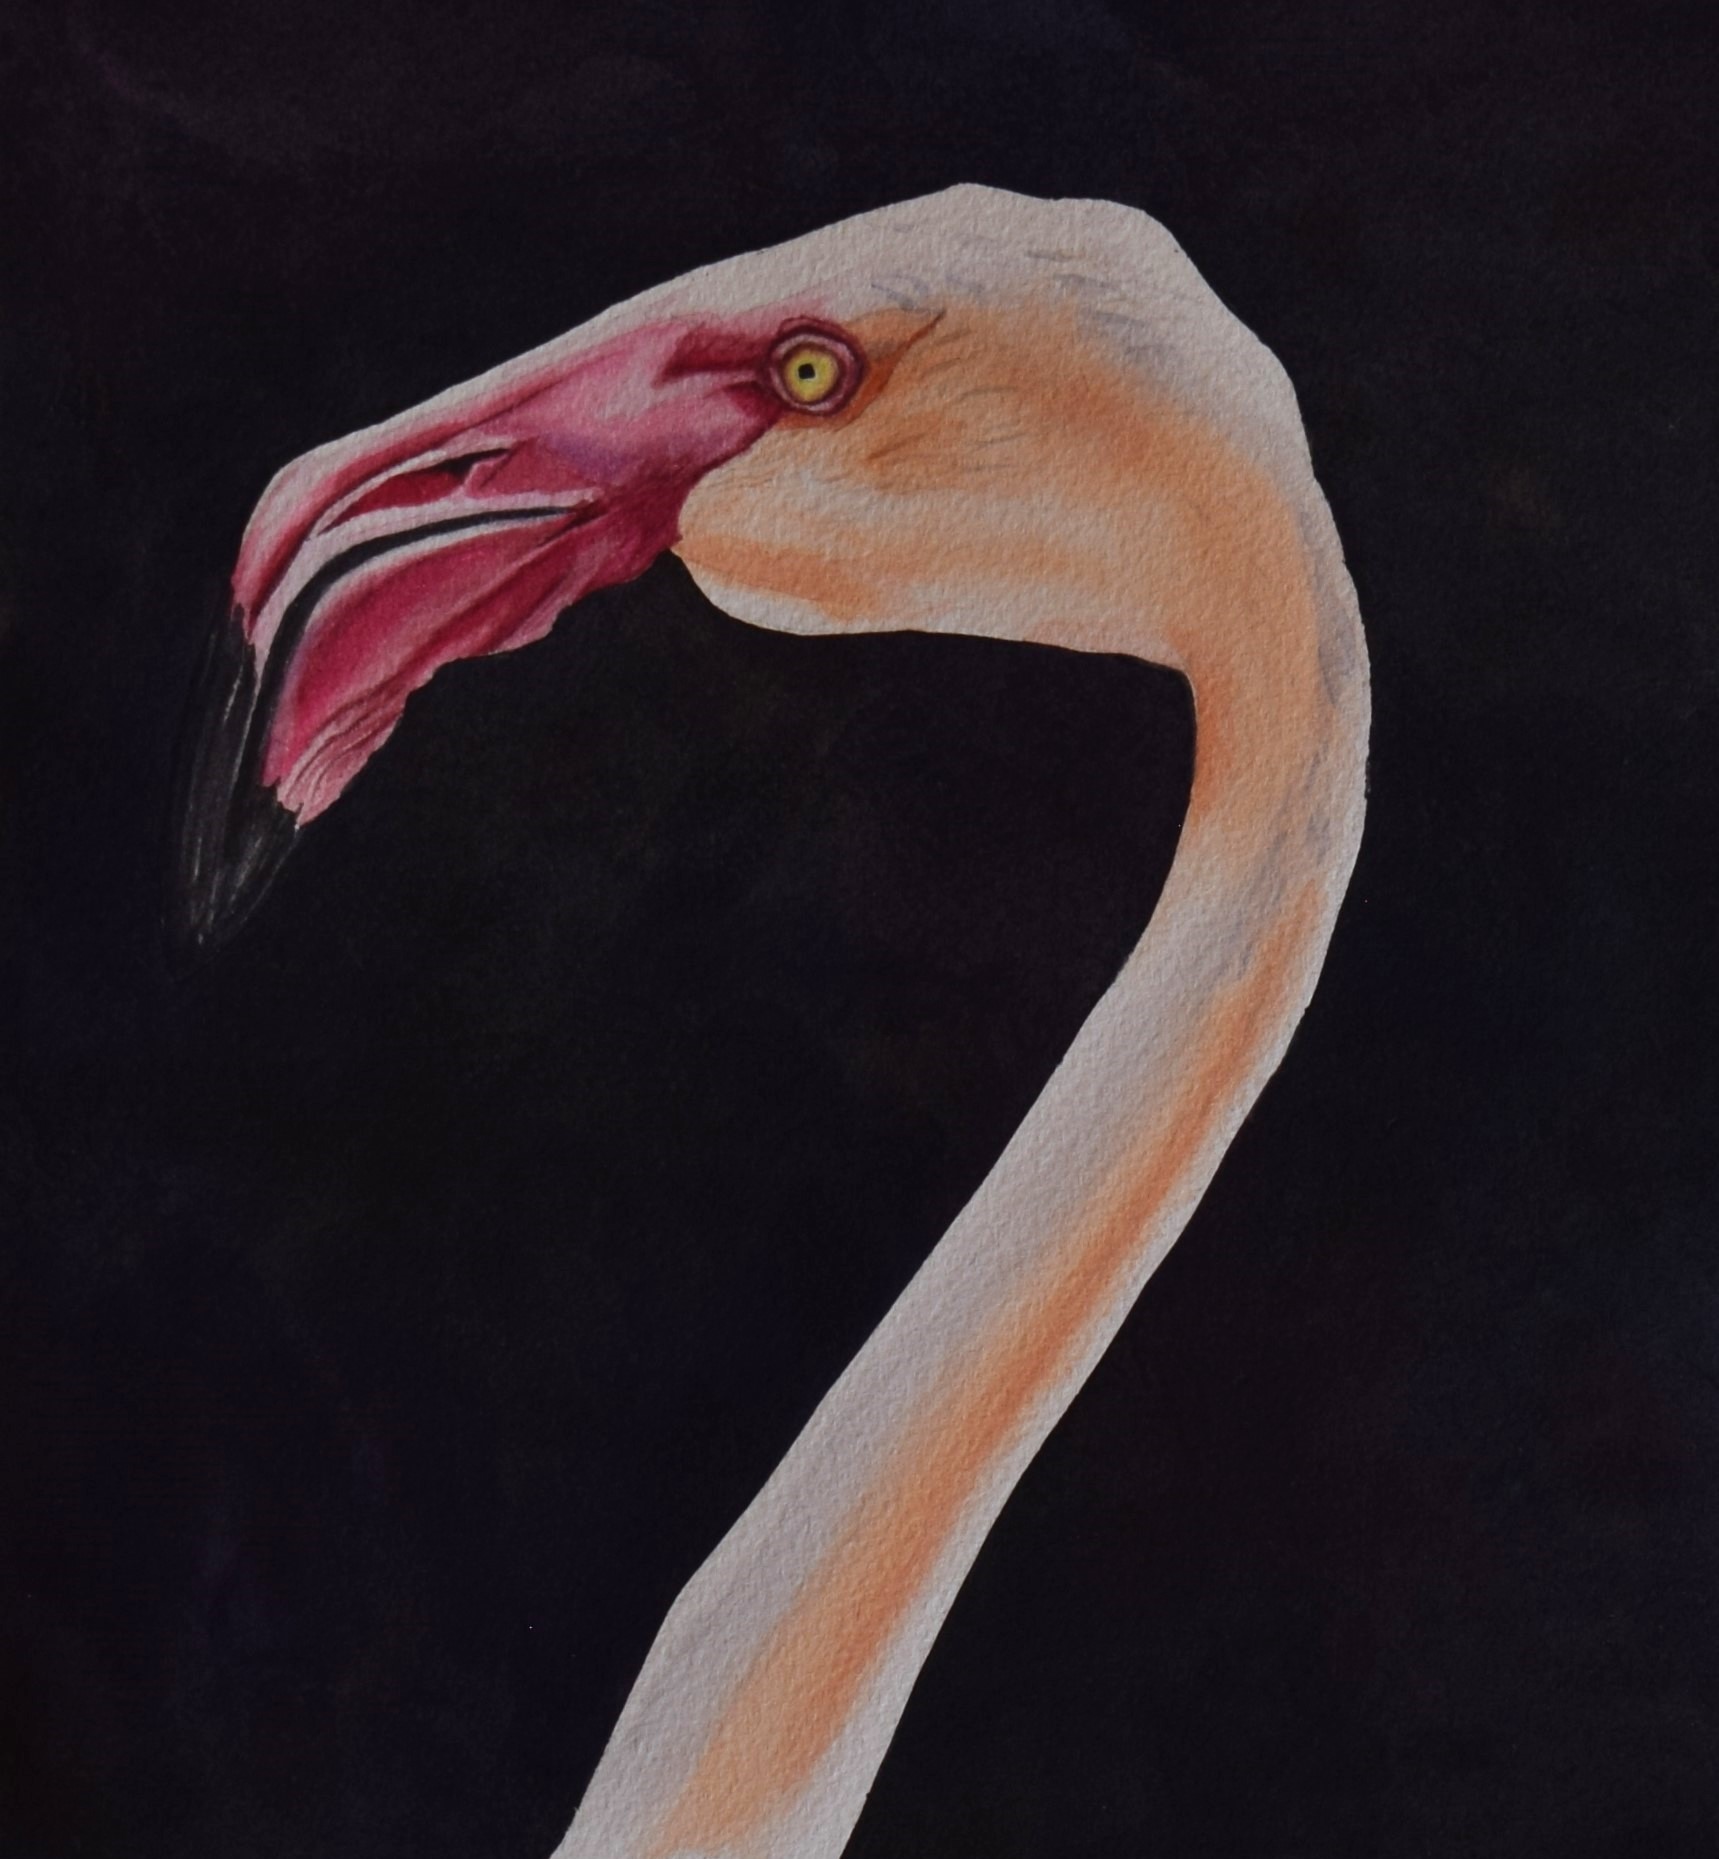 Flamingo print